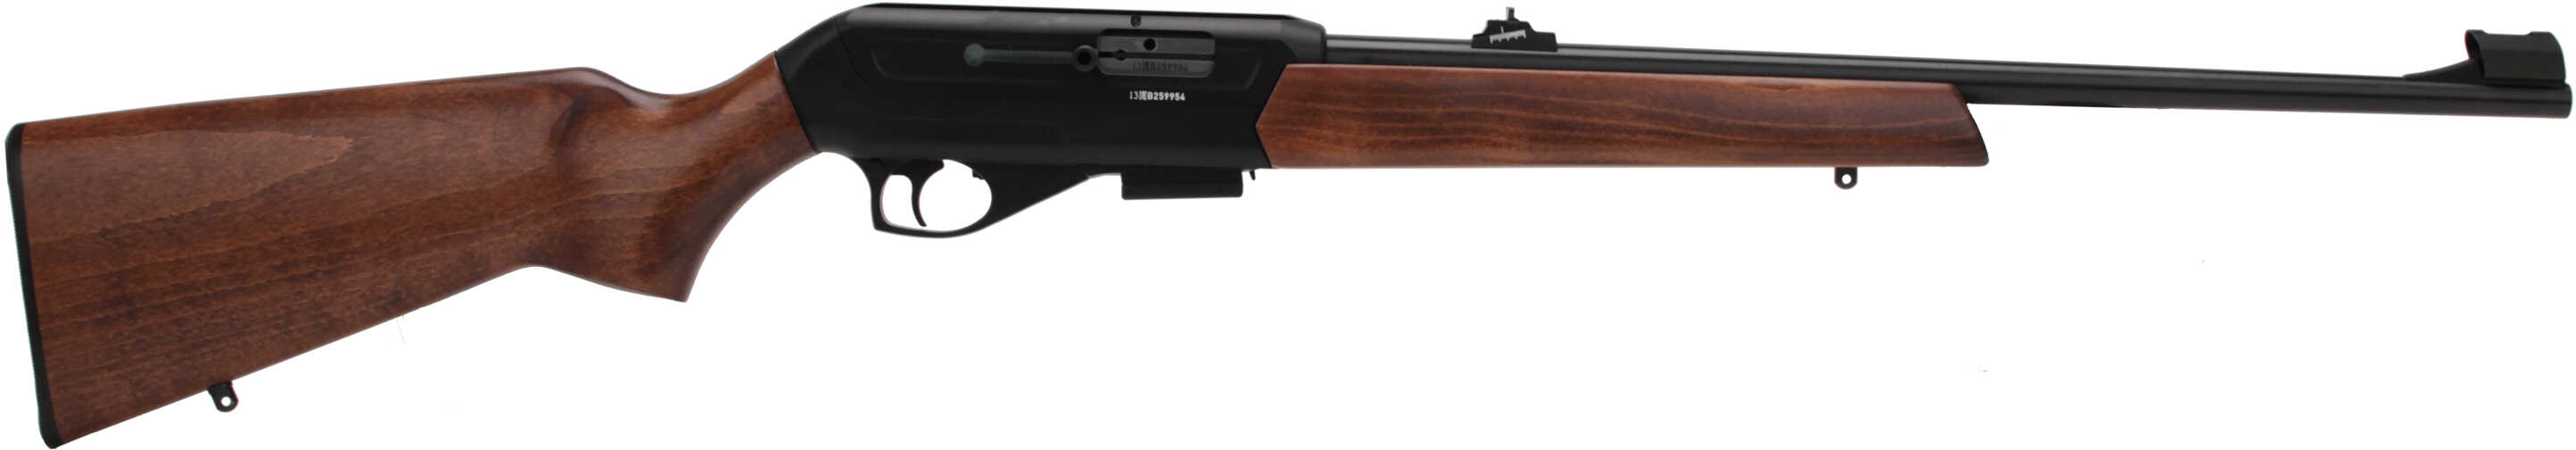 CZ USA CZ512 Semi-Auto Rifle 22 Magnum 5 Round 20.60" Blued Barrel Wood Stock Finish 02161